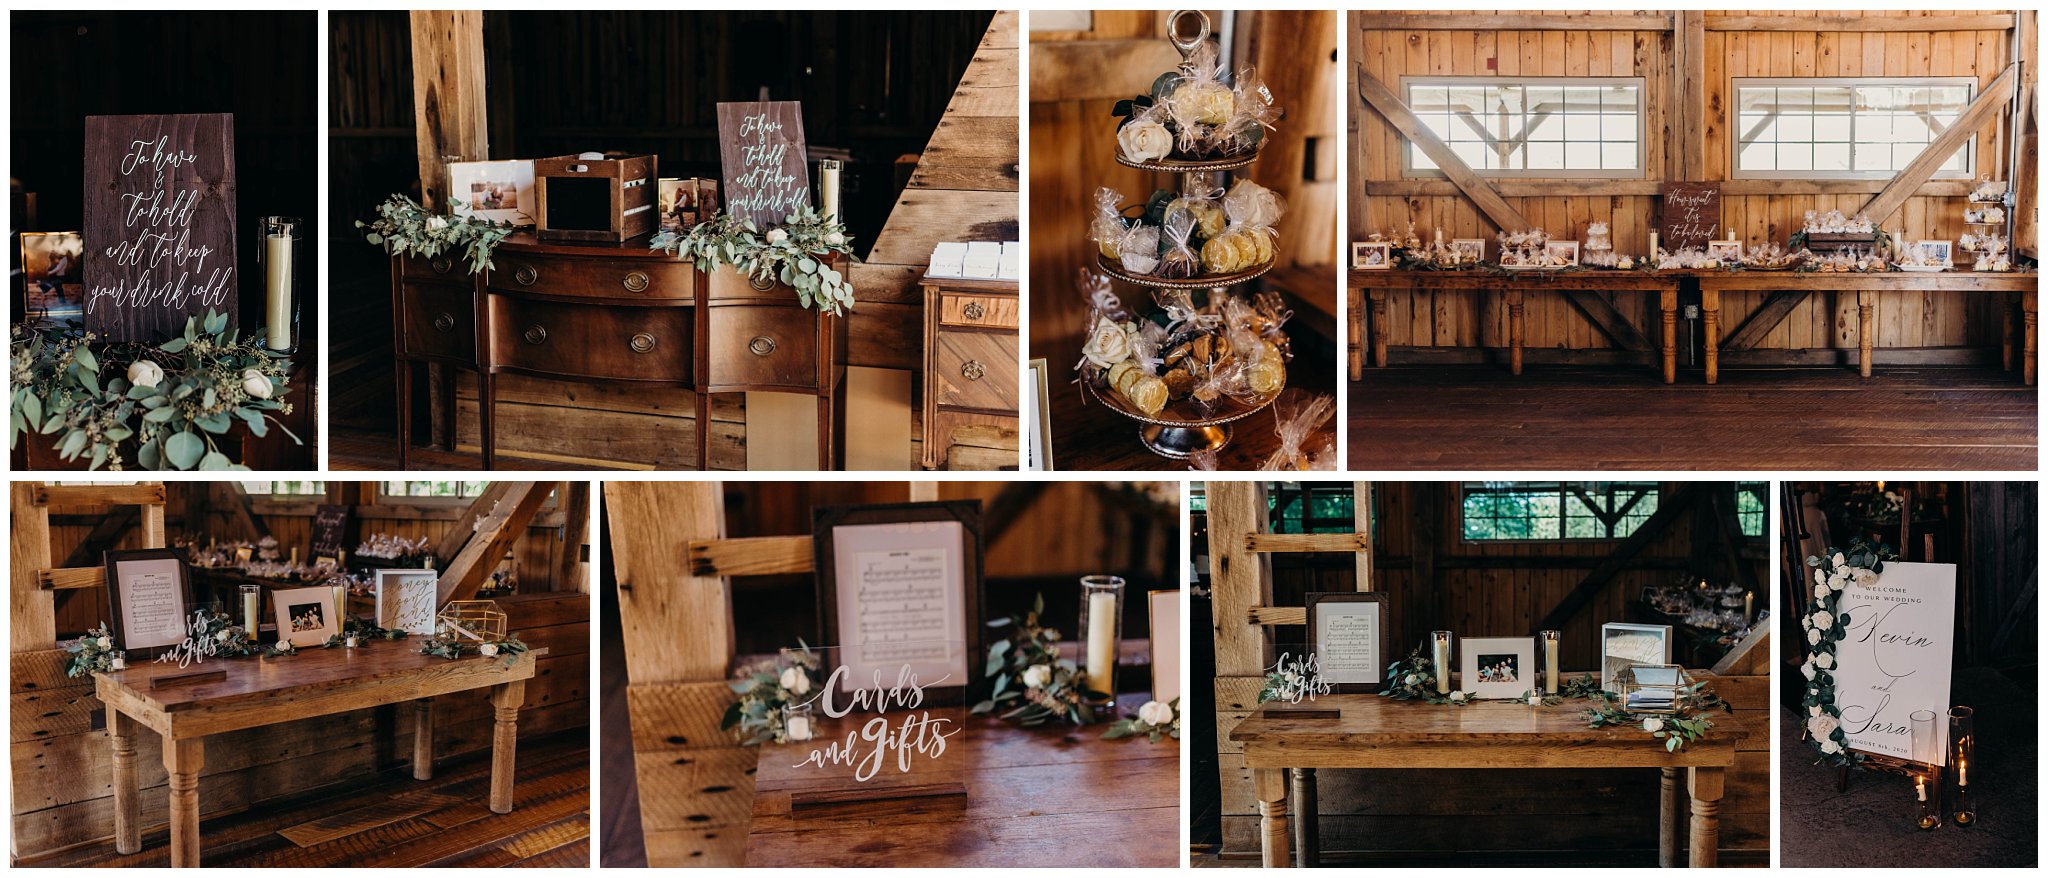 Rustic Acres Farm wedding details